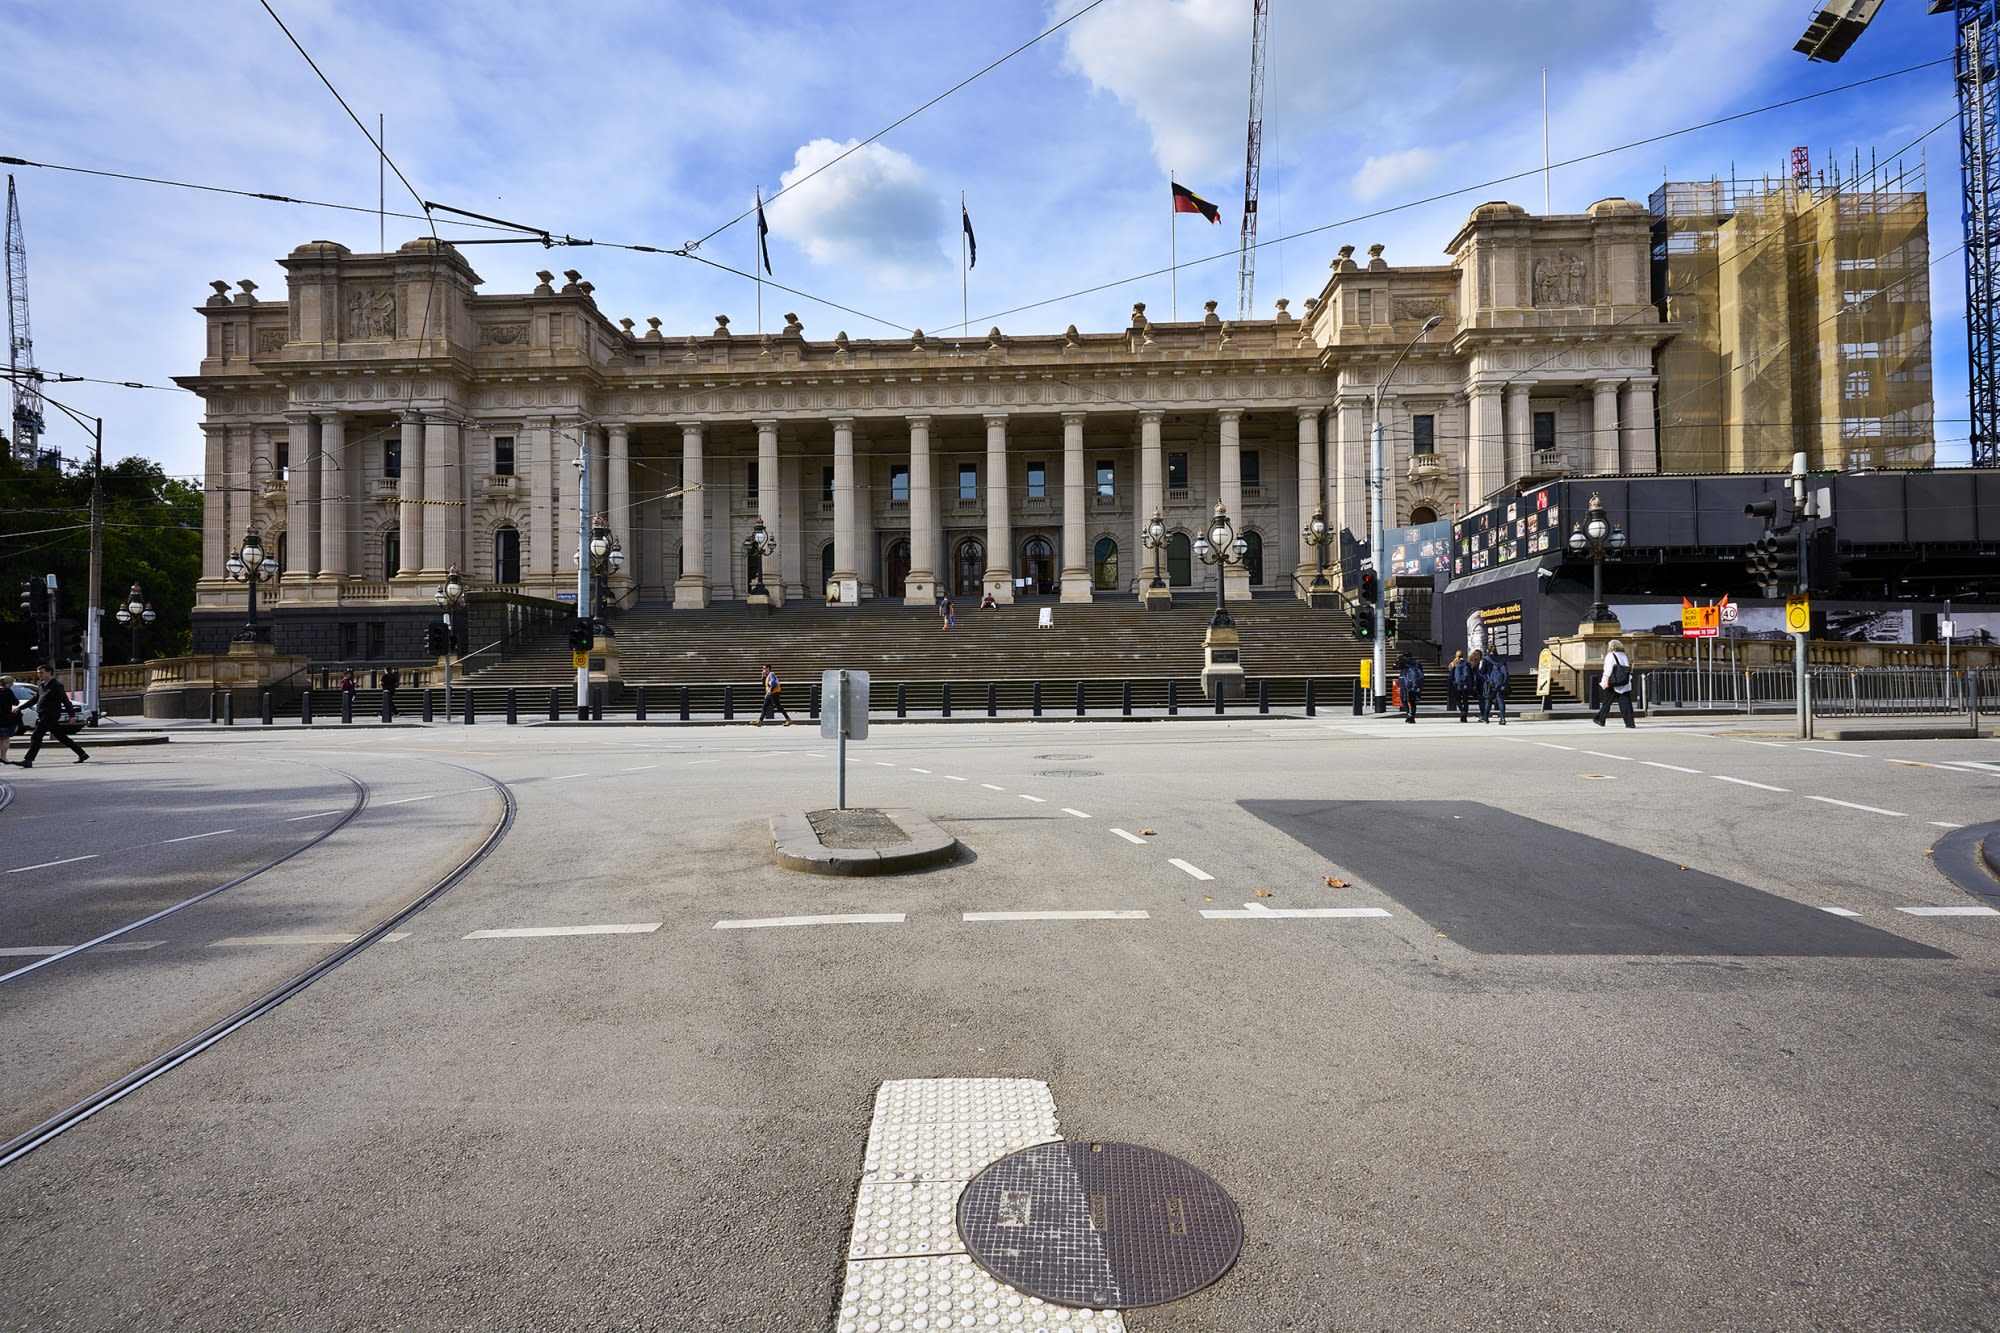 Victoria's Parliament House